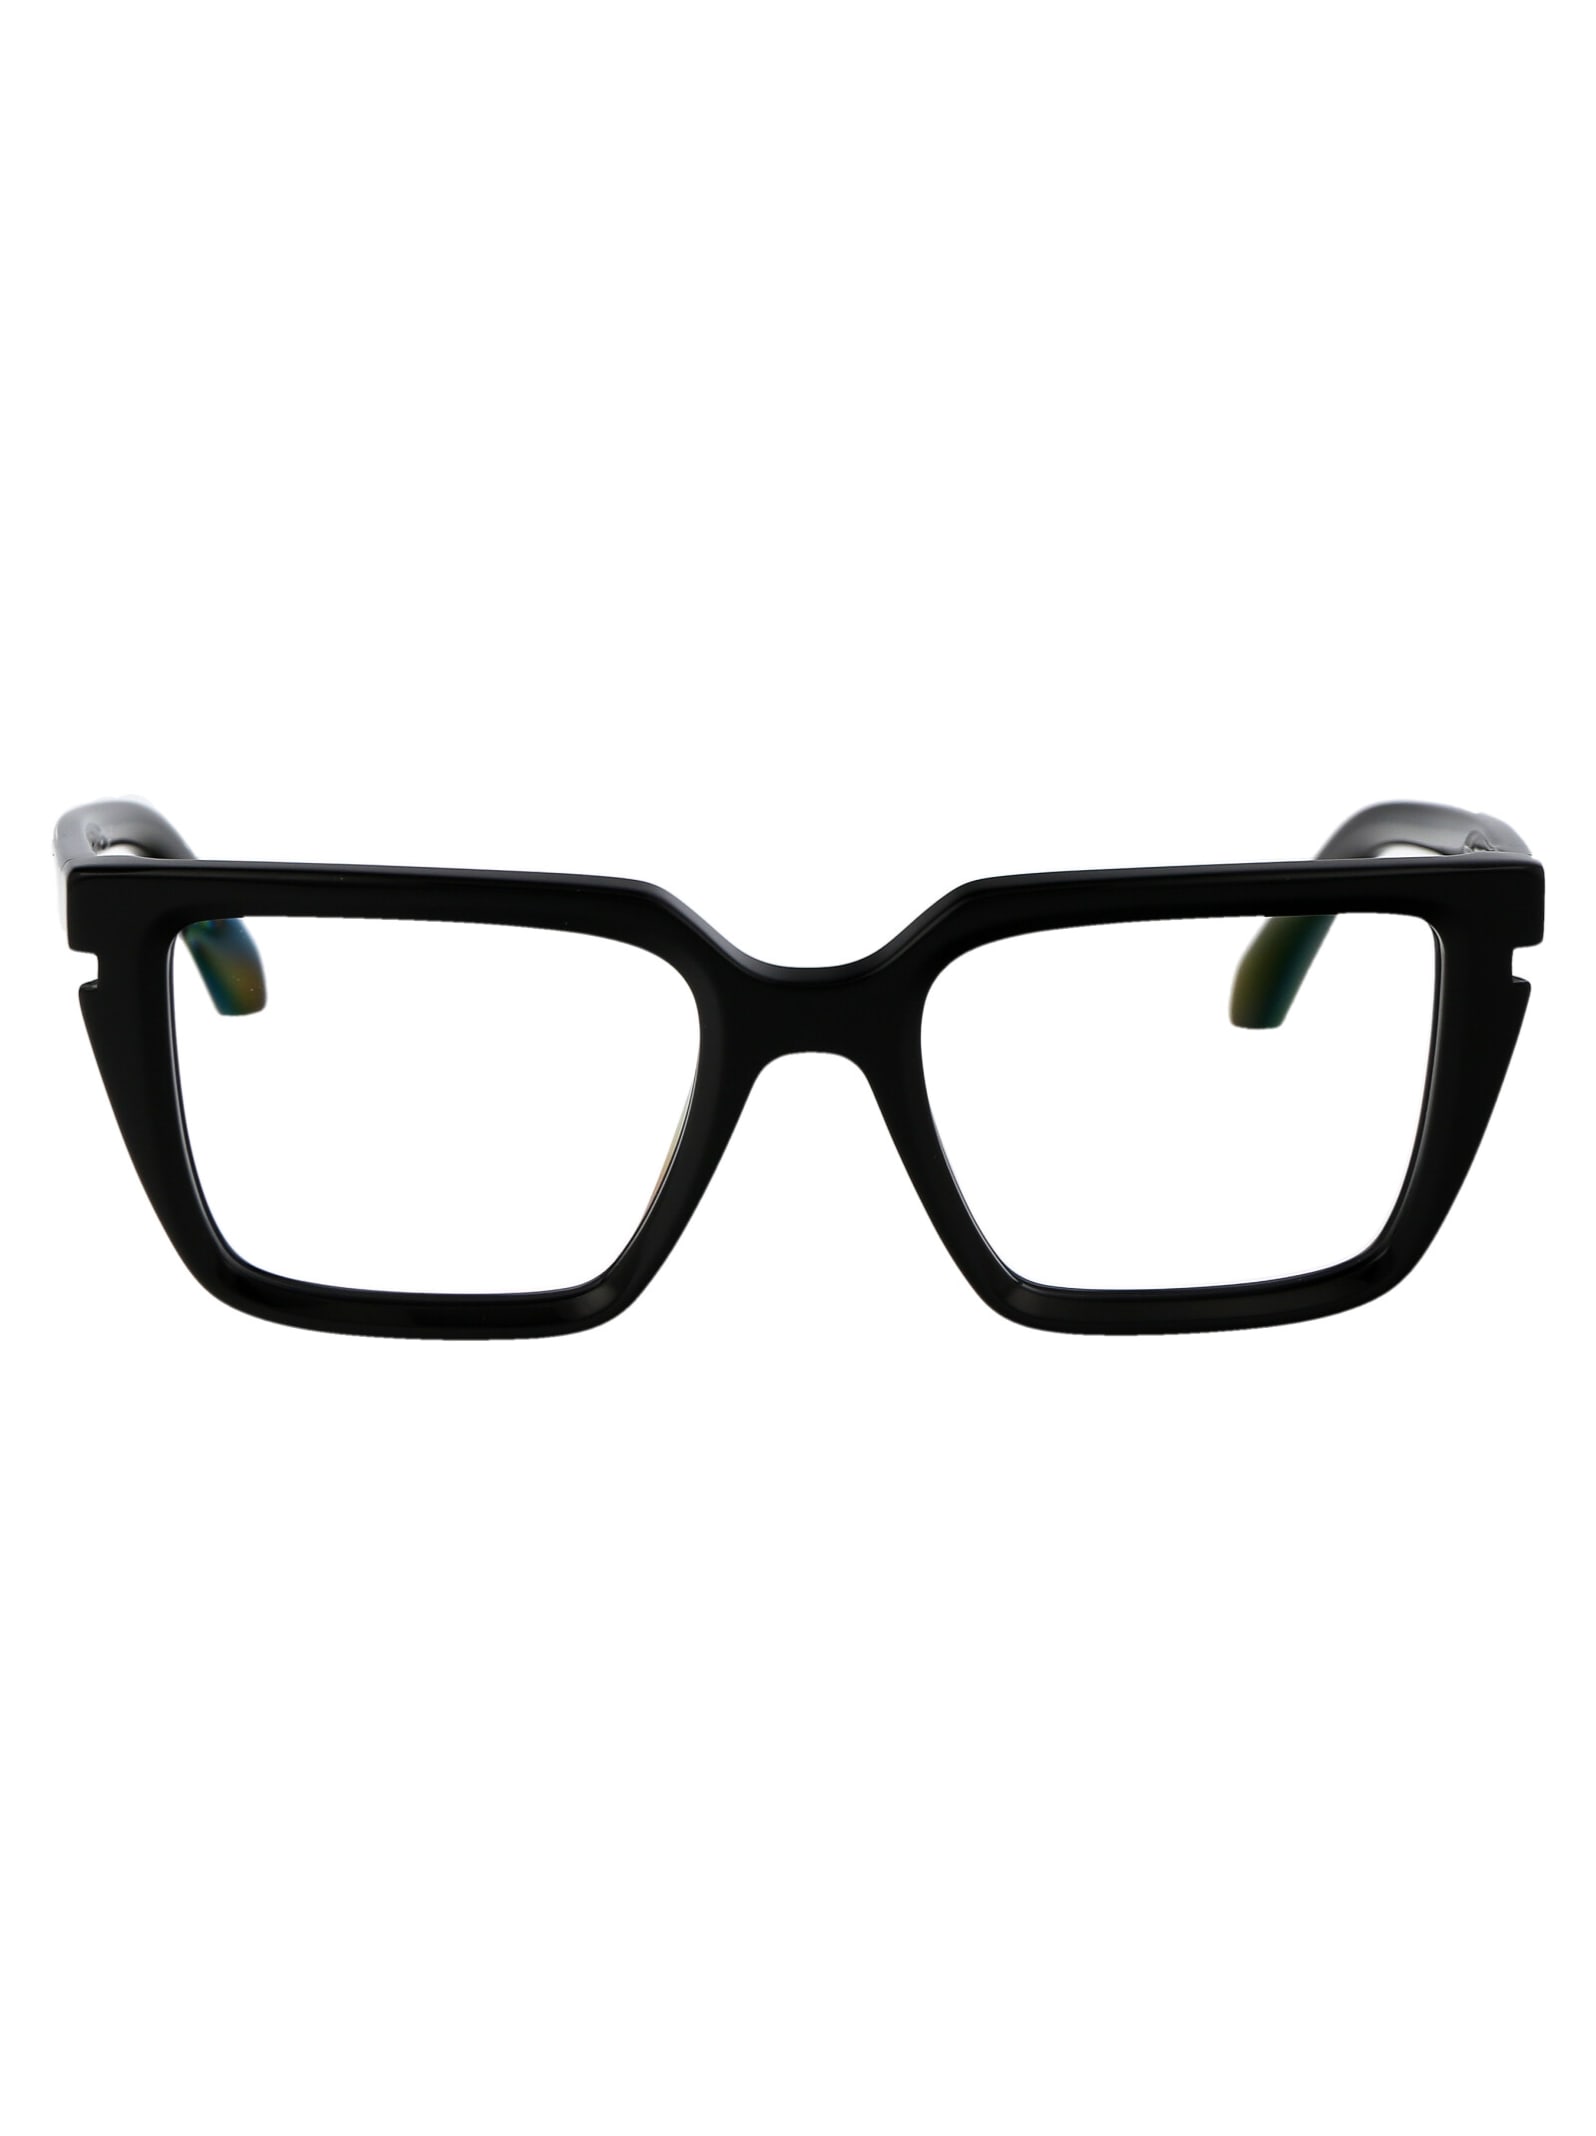 Optical Style 52 Glasses